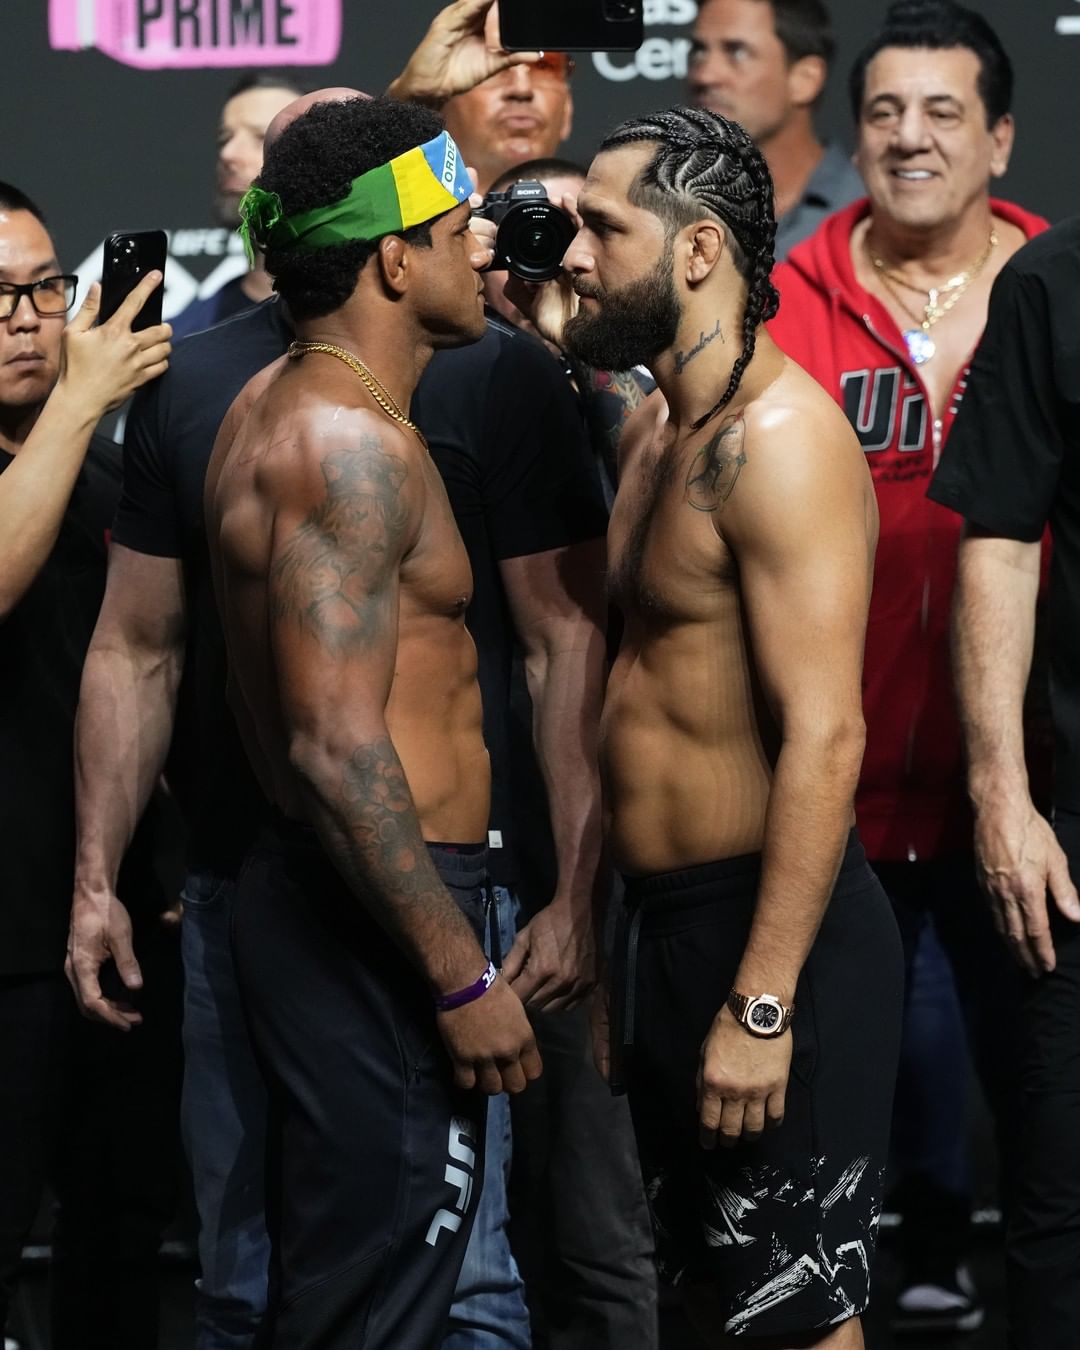 UFC 287 - Gilbert Burns vs Jorge Masvidal